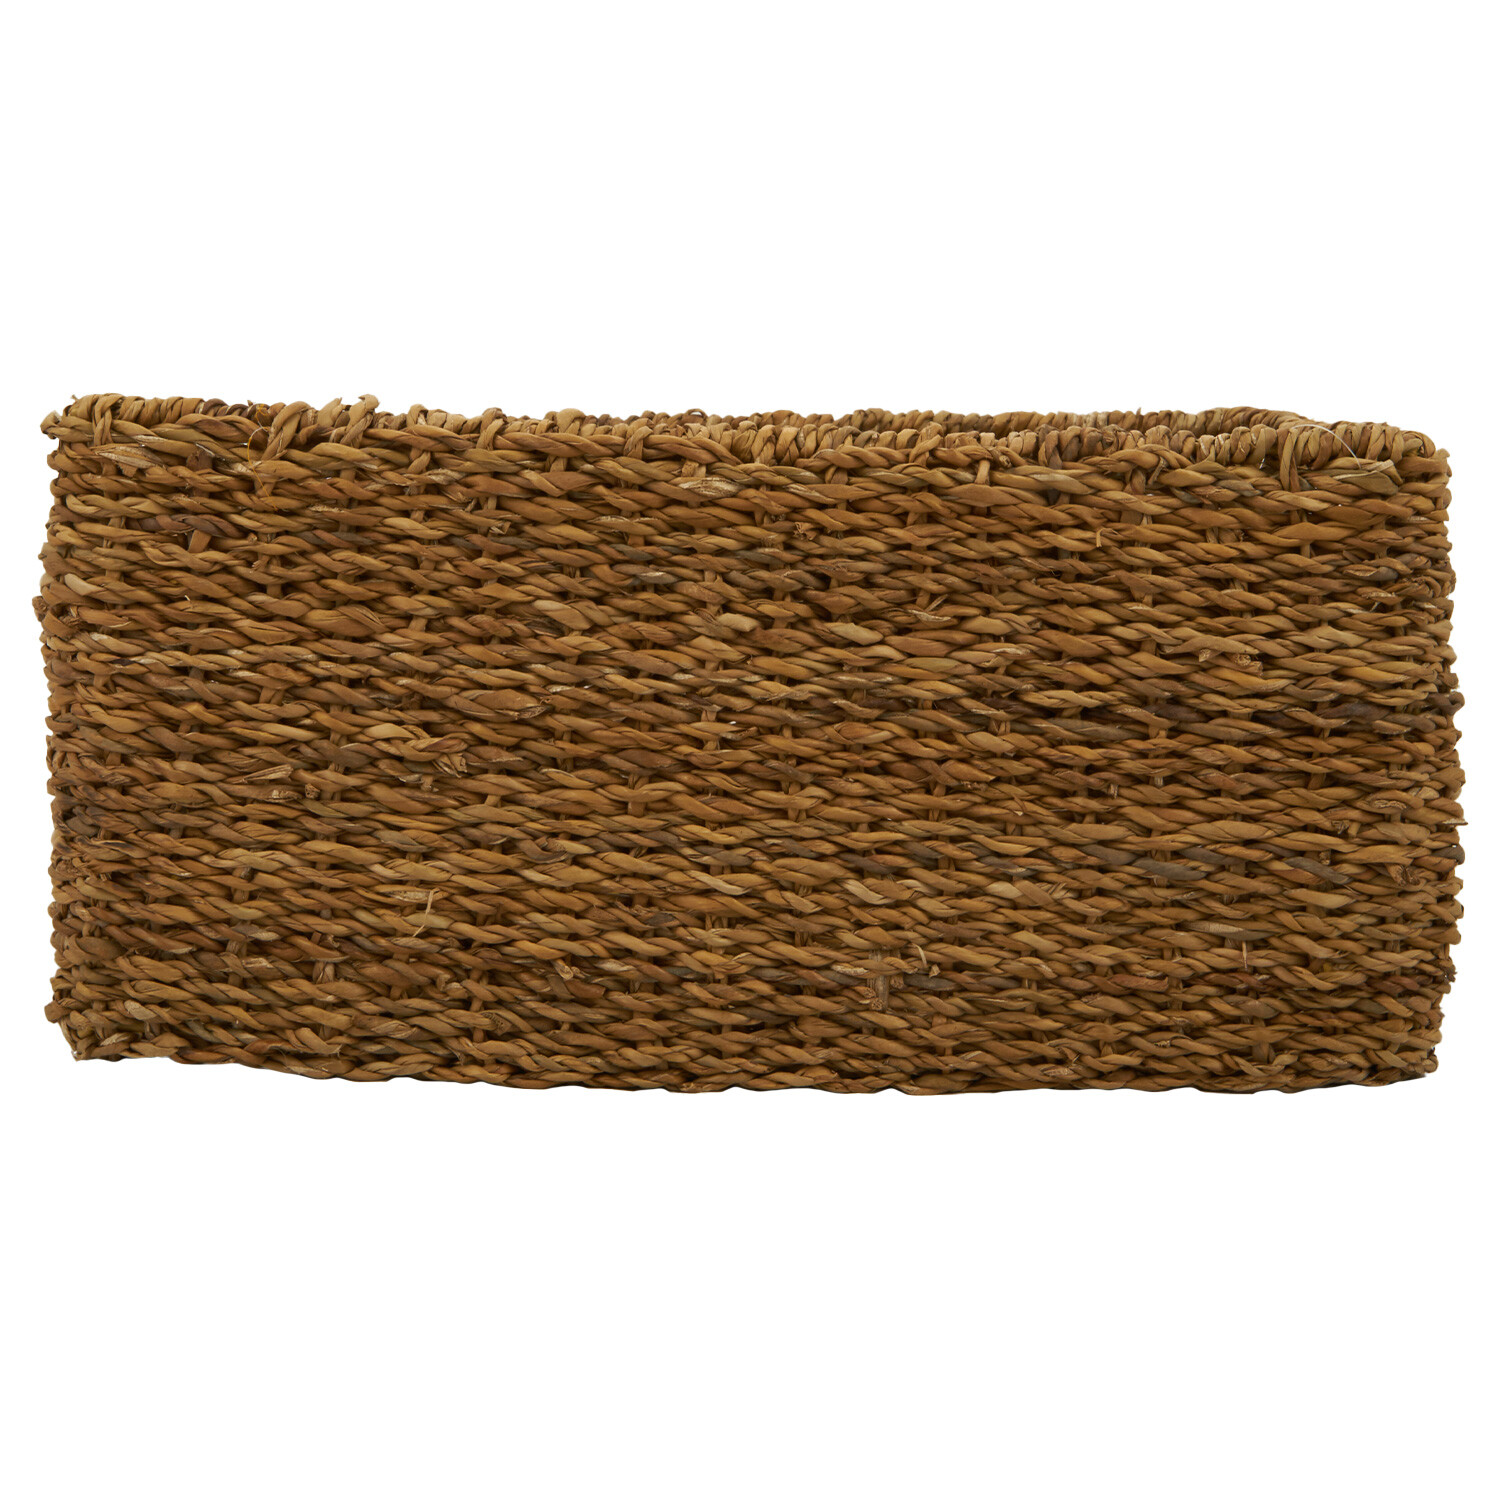 Set of 2 Sea Grass Storage Baskets - Brown Image 4